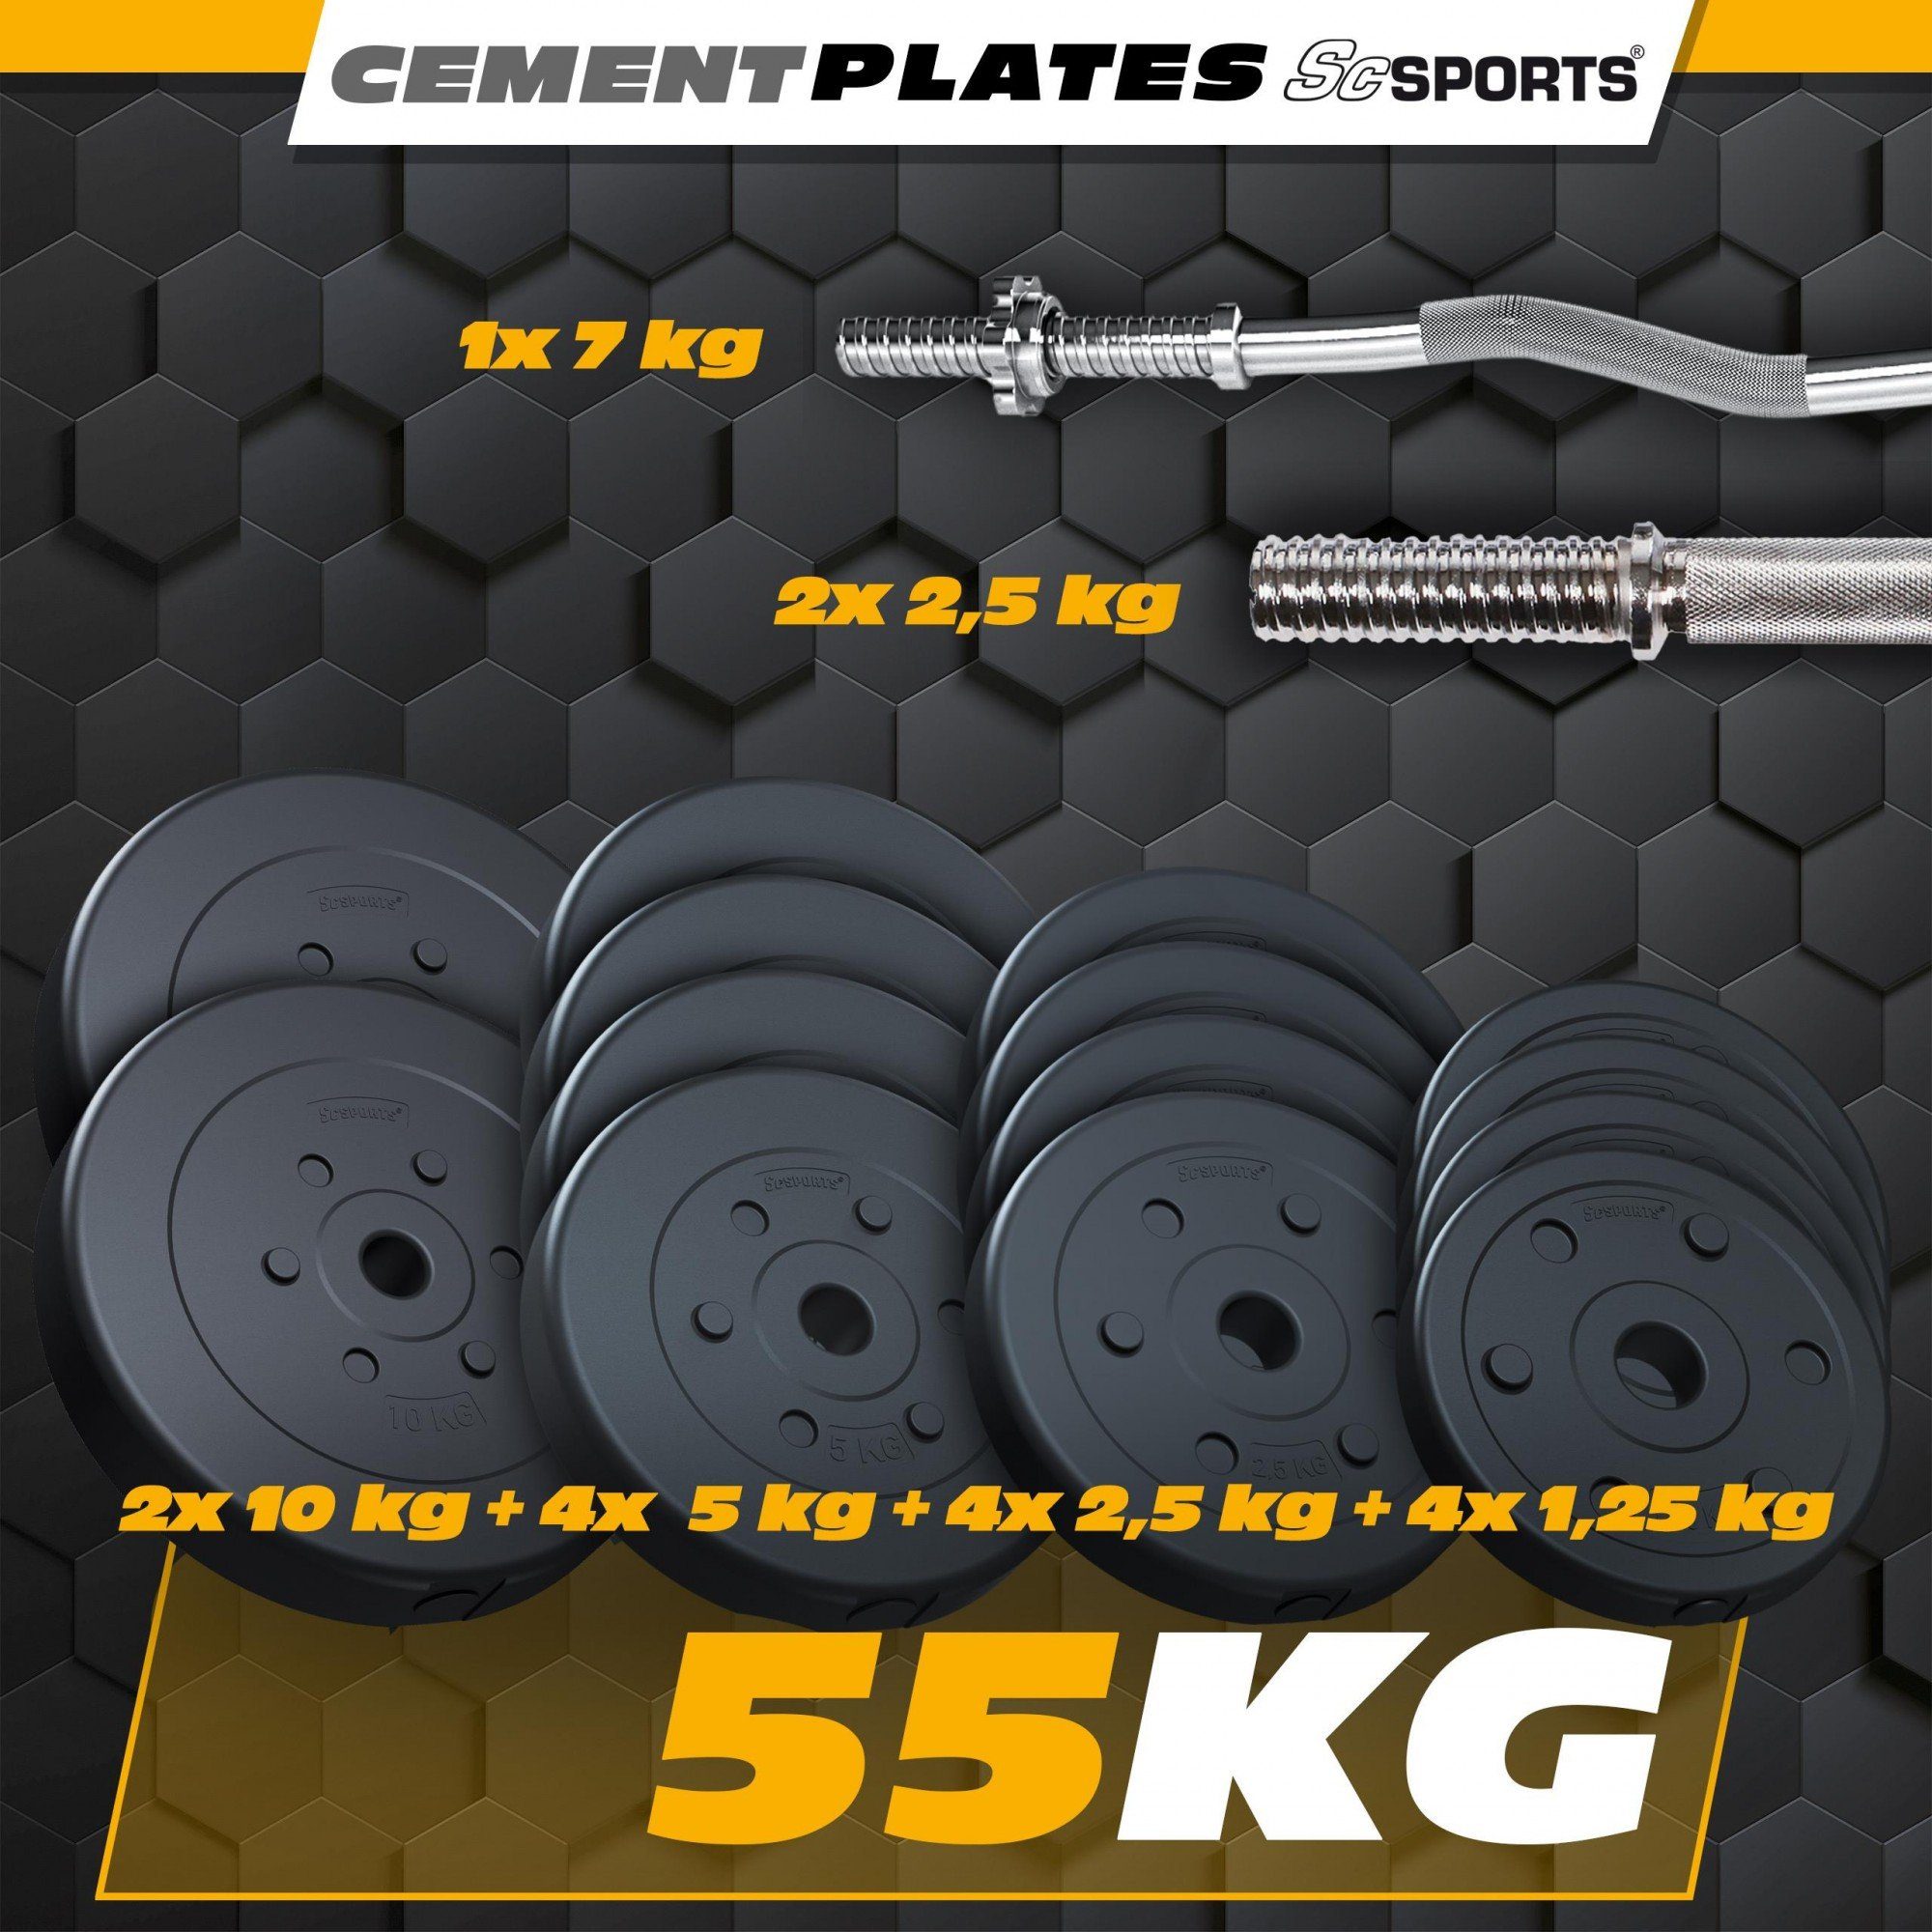 Stange 31mm Hanteln ScSPORTS® Kurzhanteln Gewichte Hantel-Set Kunststoff SZ 66kg